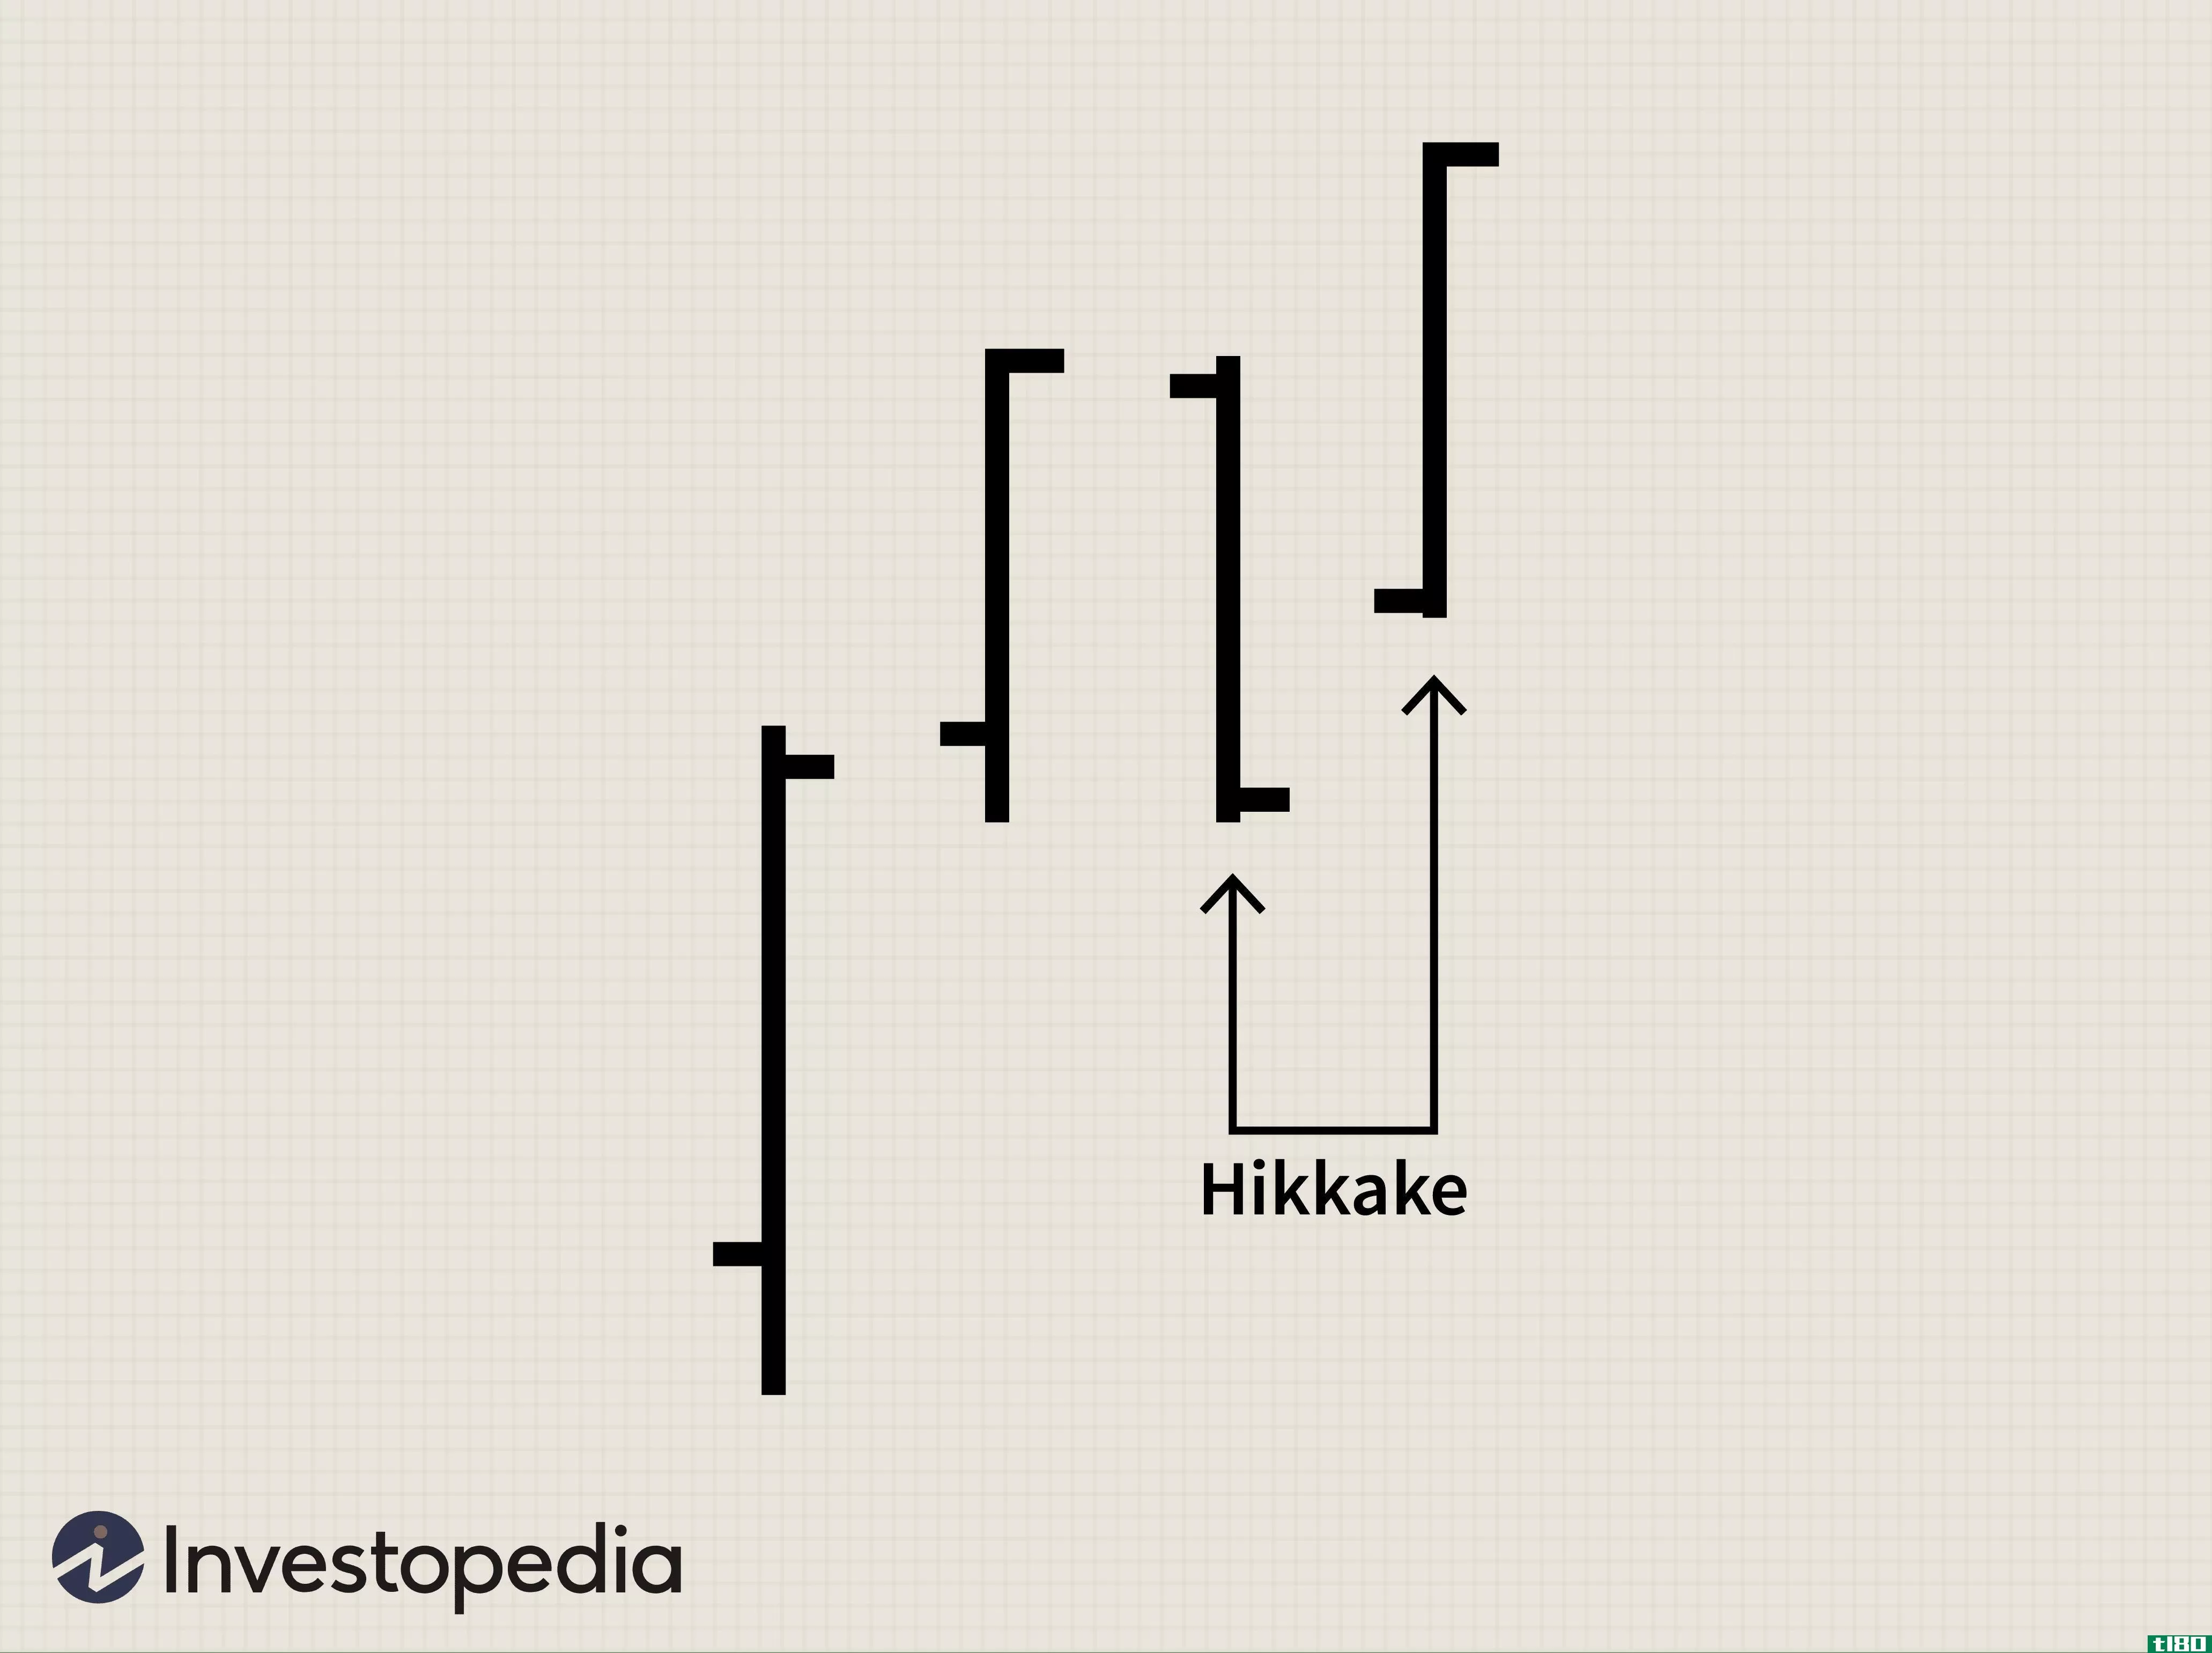 Modified Hikkake Pattern